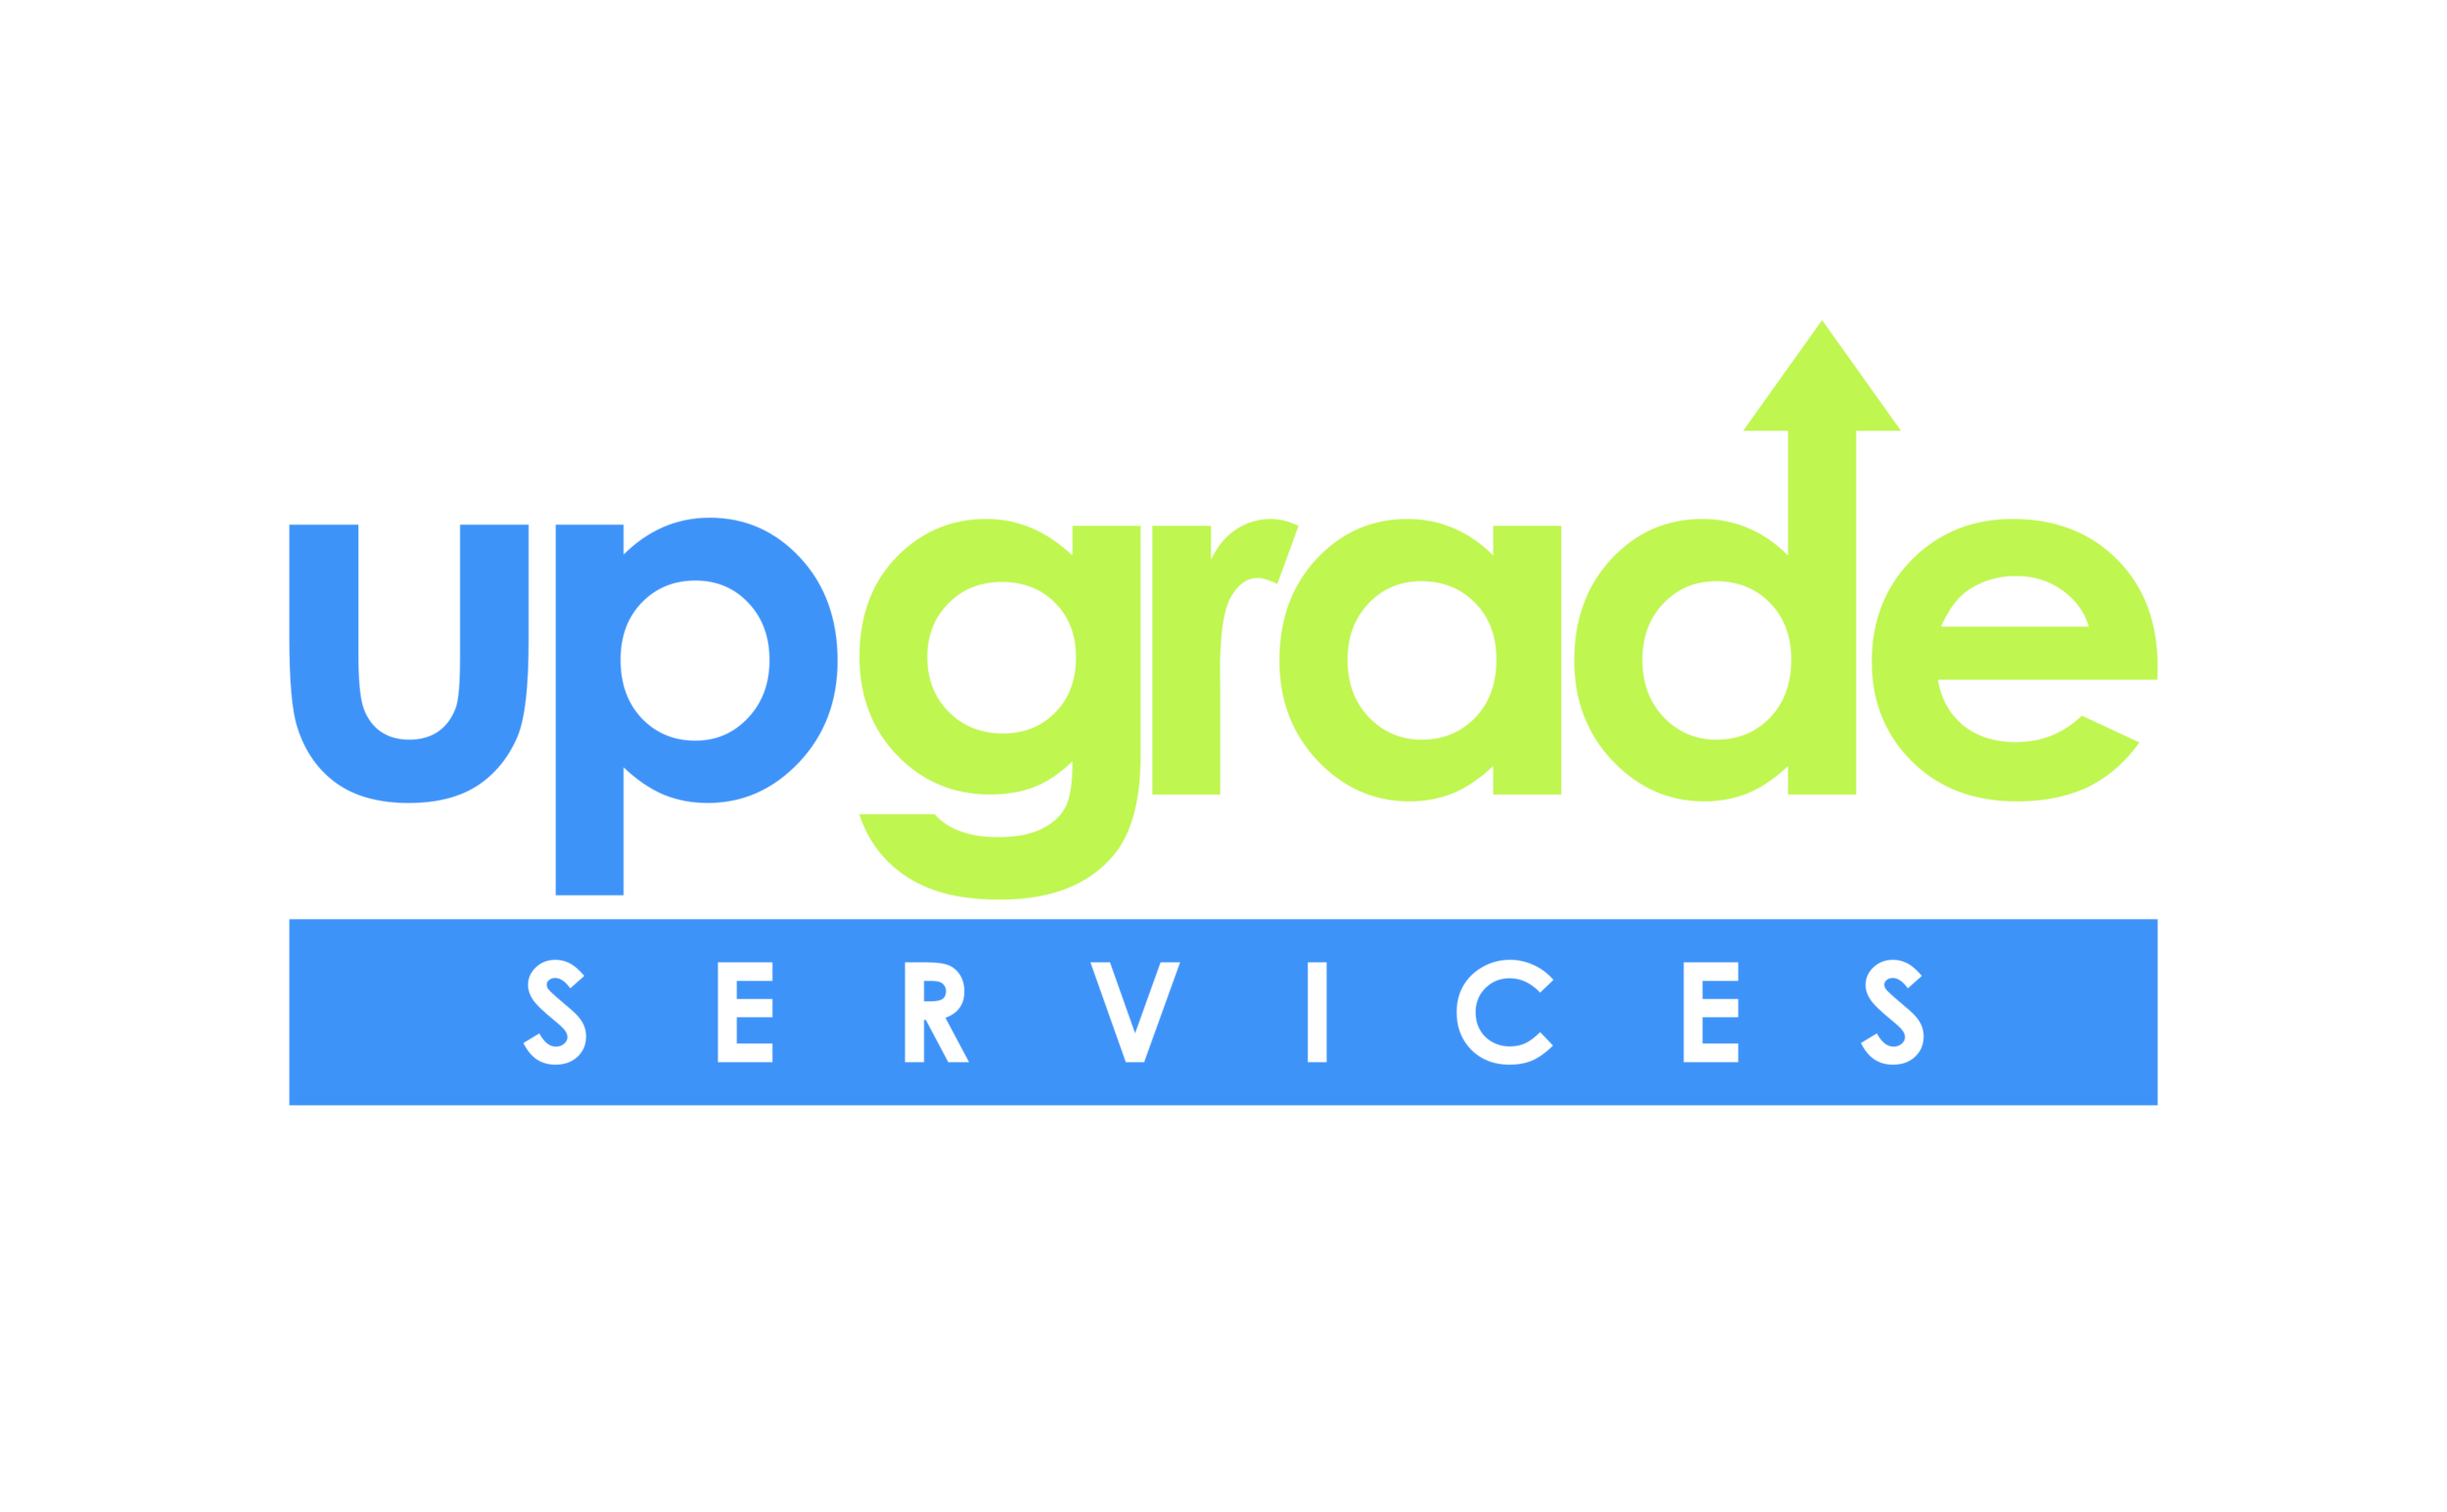 Upgrade Services